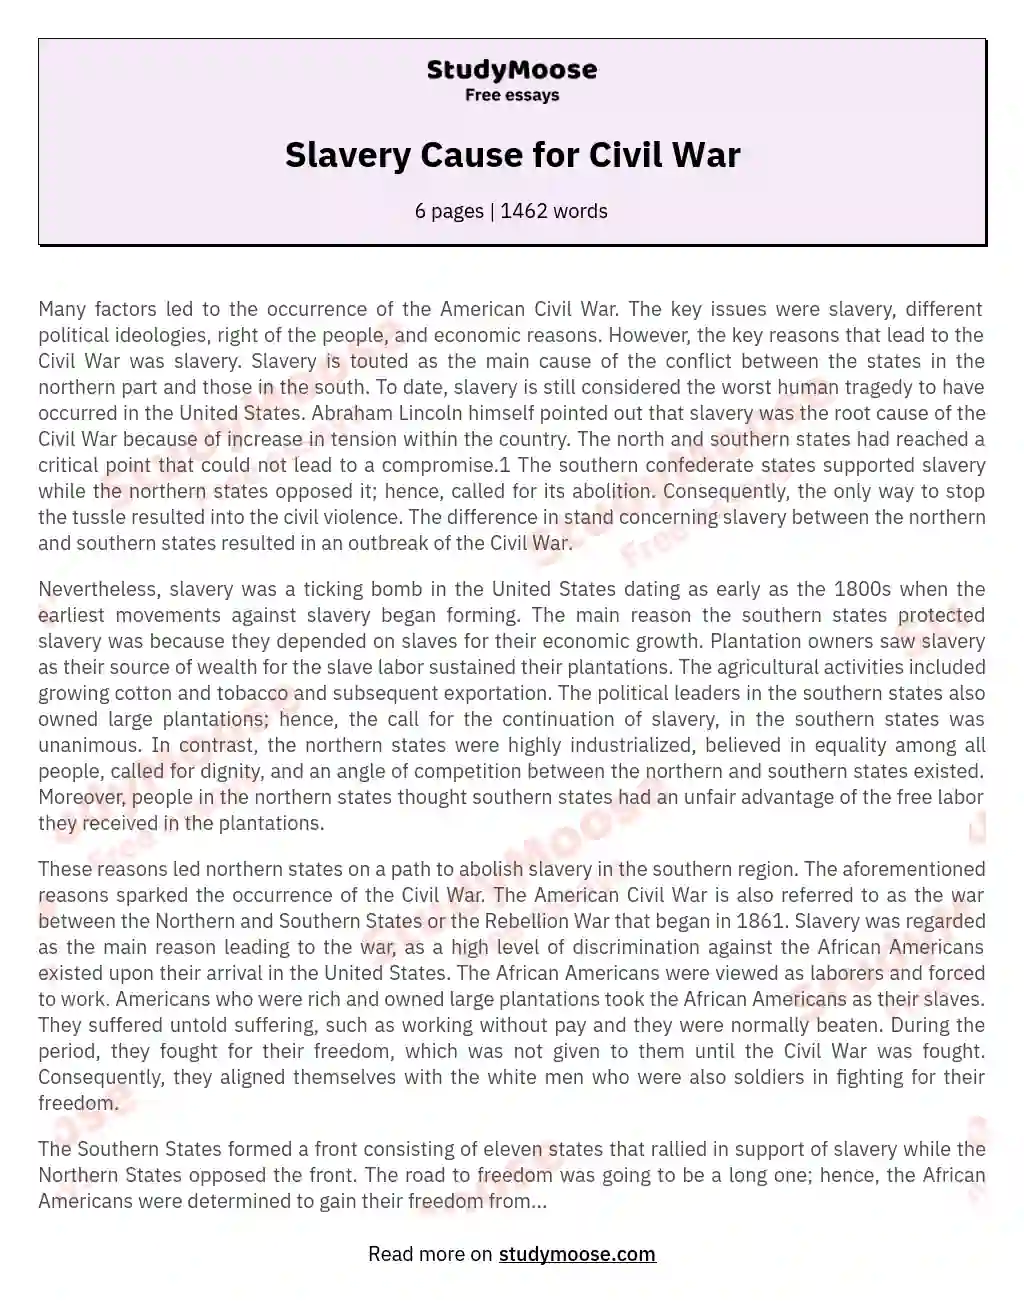 Slavery Cause for Civil War essay